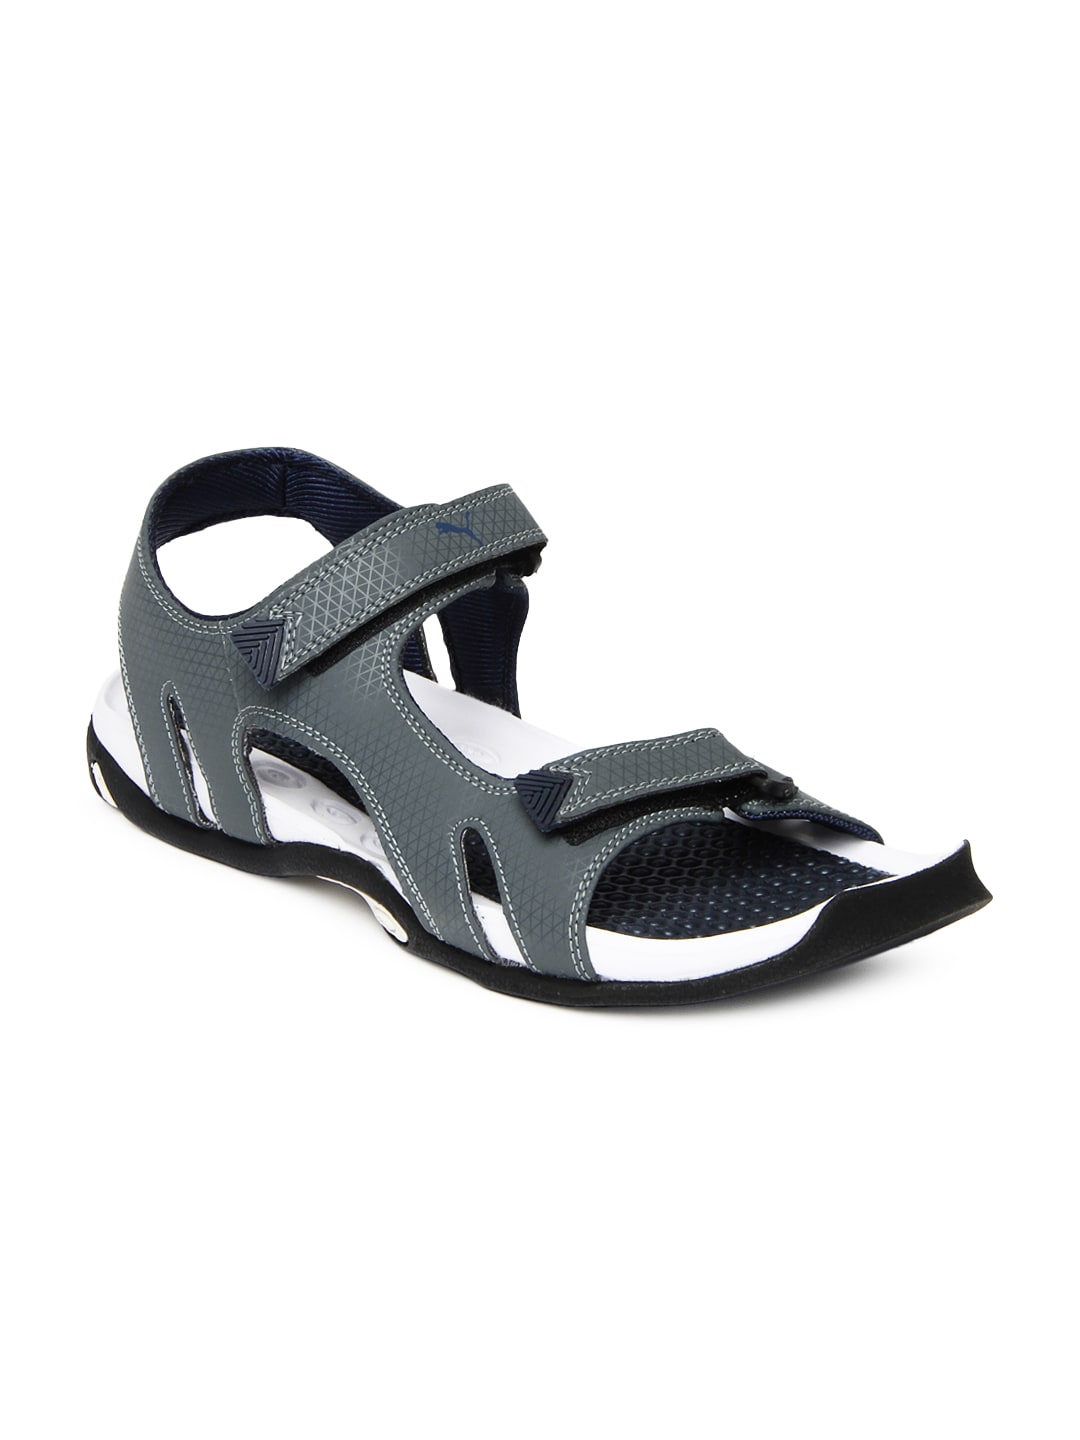 puma sandals for men offers